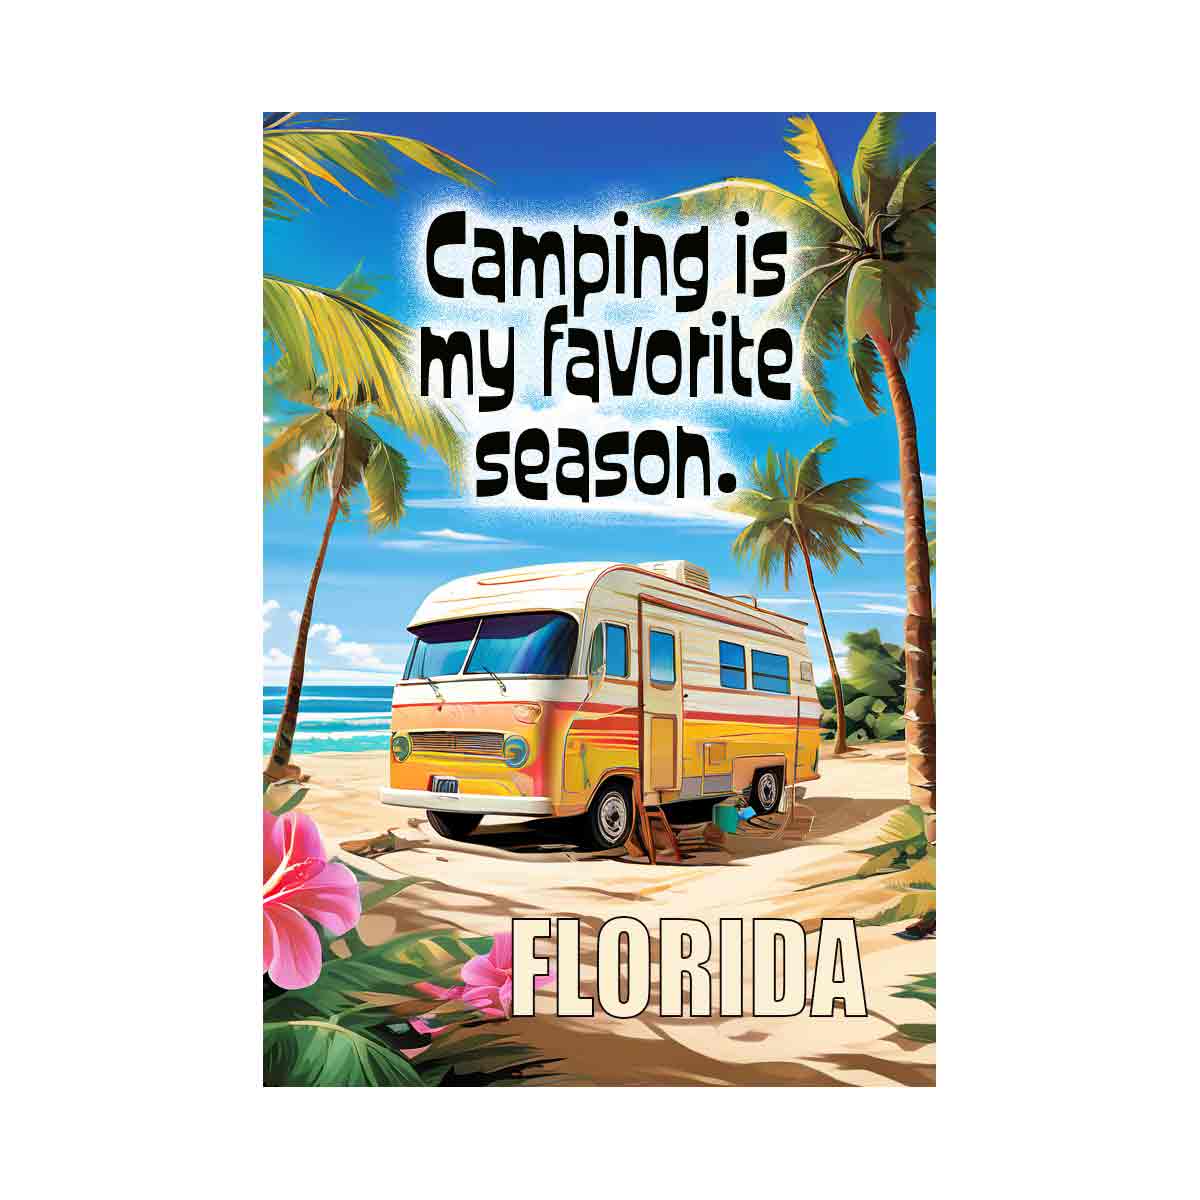 Camping iis my favorite Season   Florida